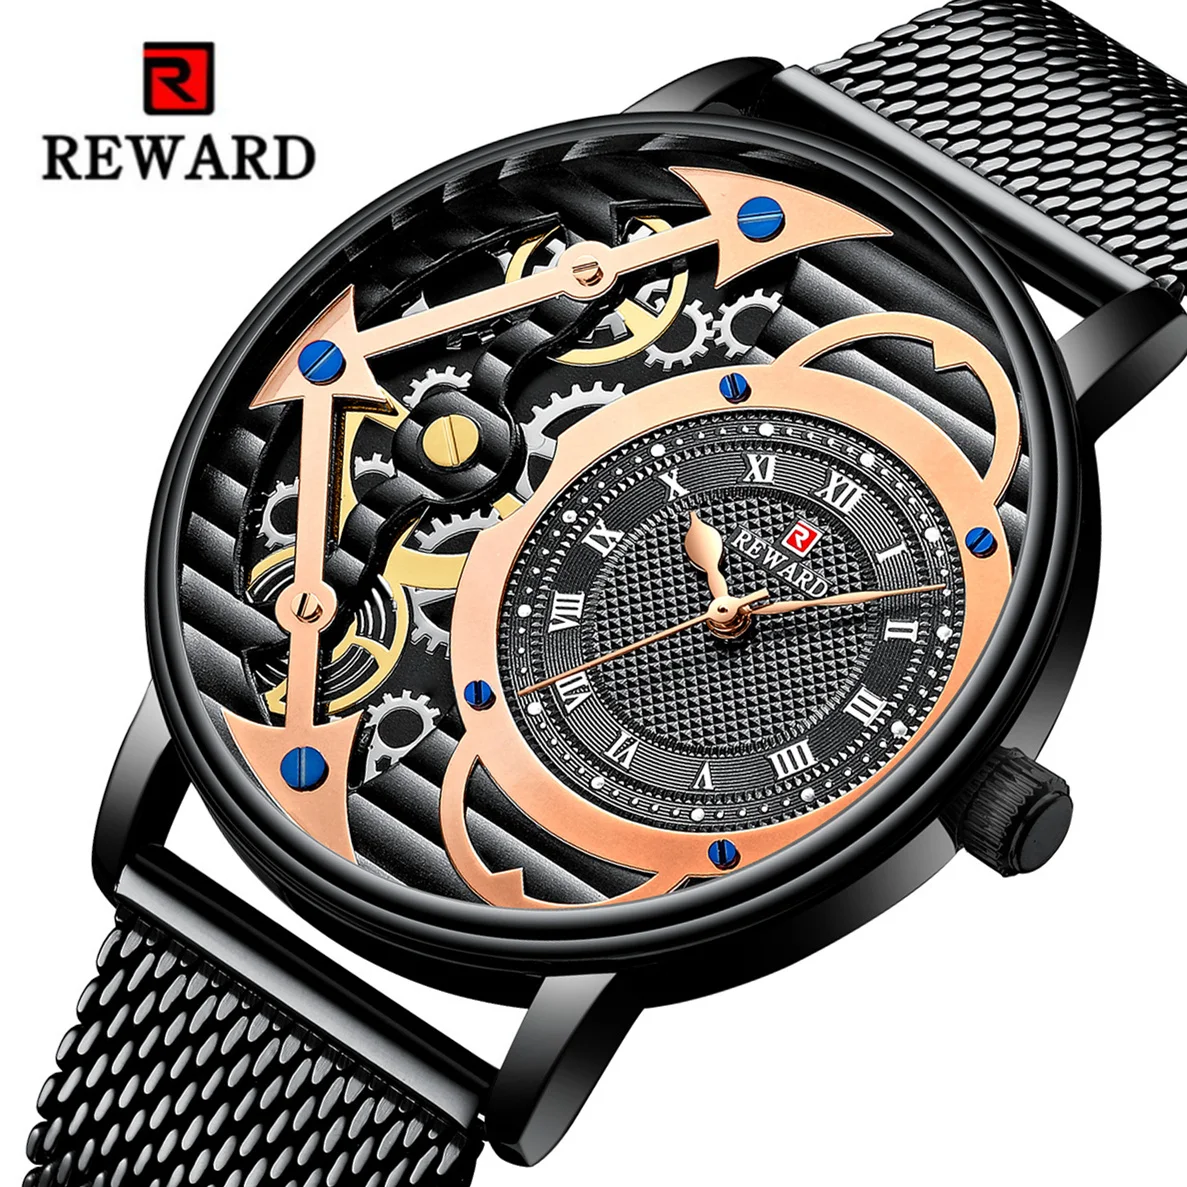 

REWARD Top Luxury Brand Chronograph Hombre Reloj Wristwatch Men's WatchWaterproof Stainless Steel Relogio Masculino Male Clock